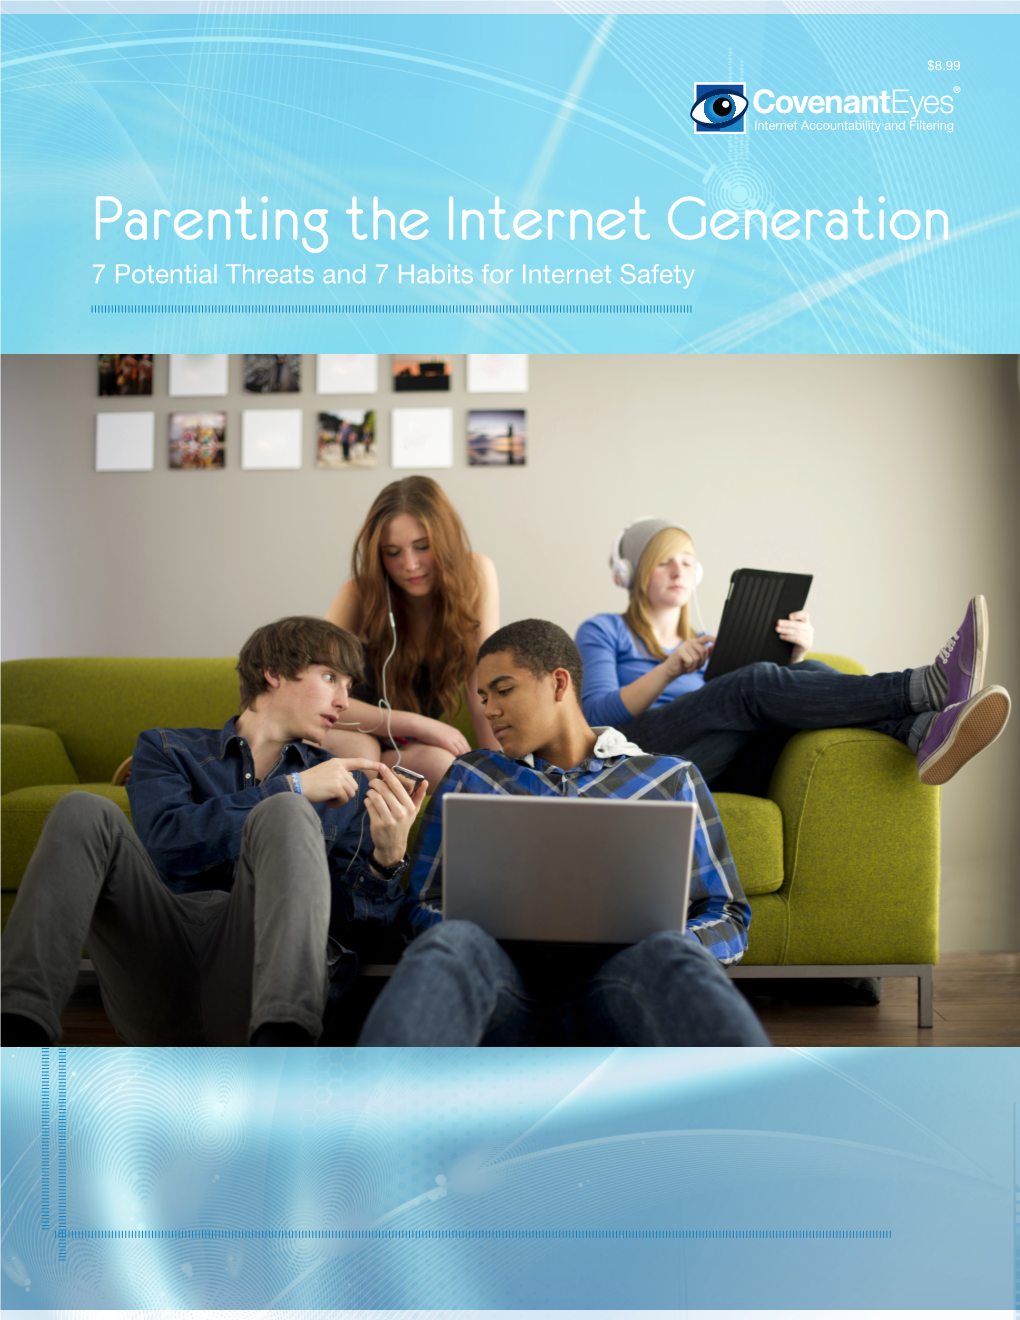 Parenting the Internet Generation | Covenant Eyes Internet